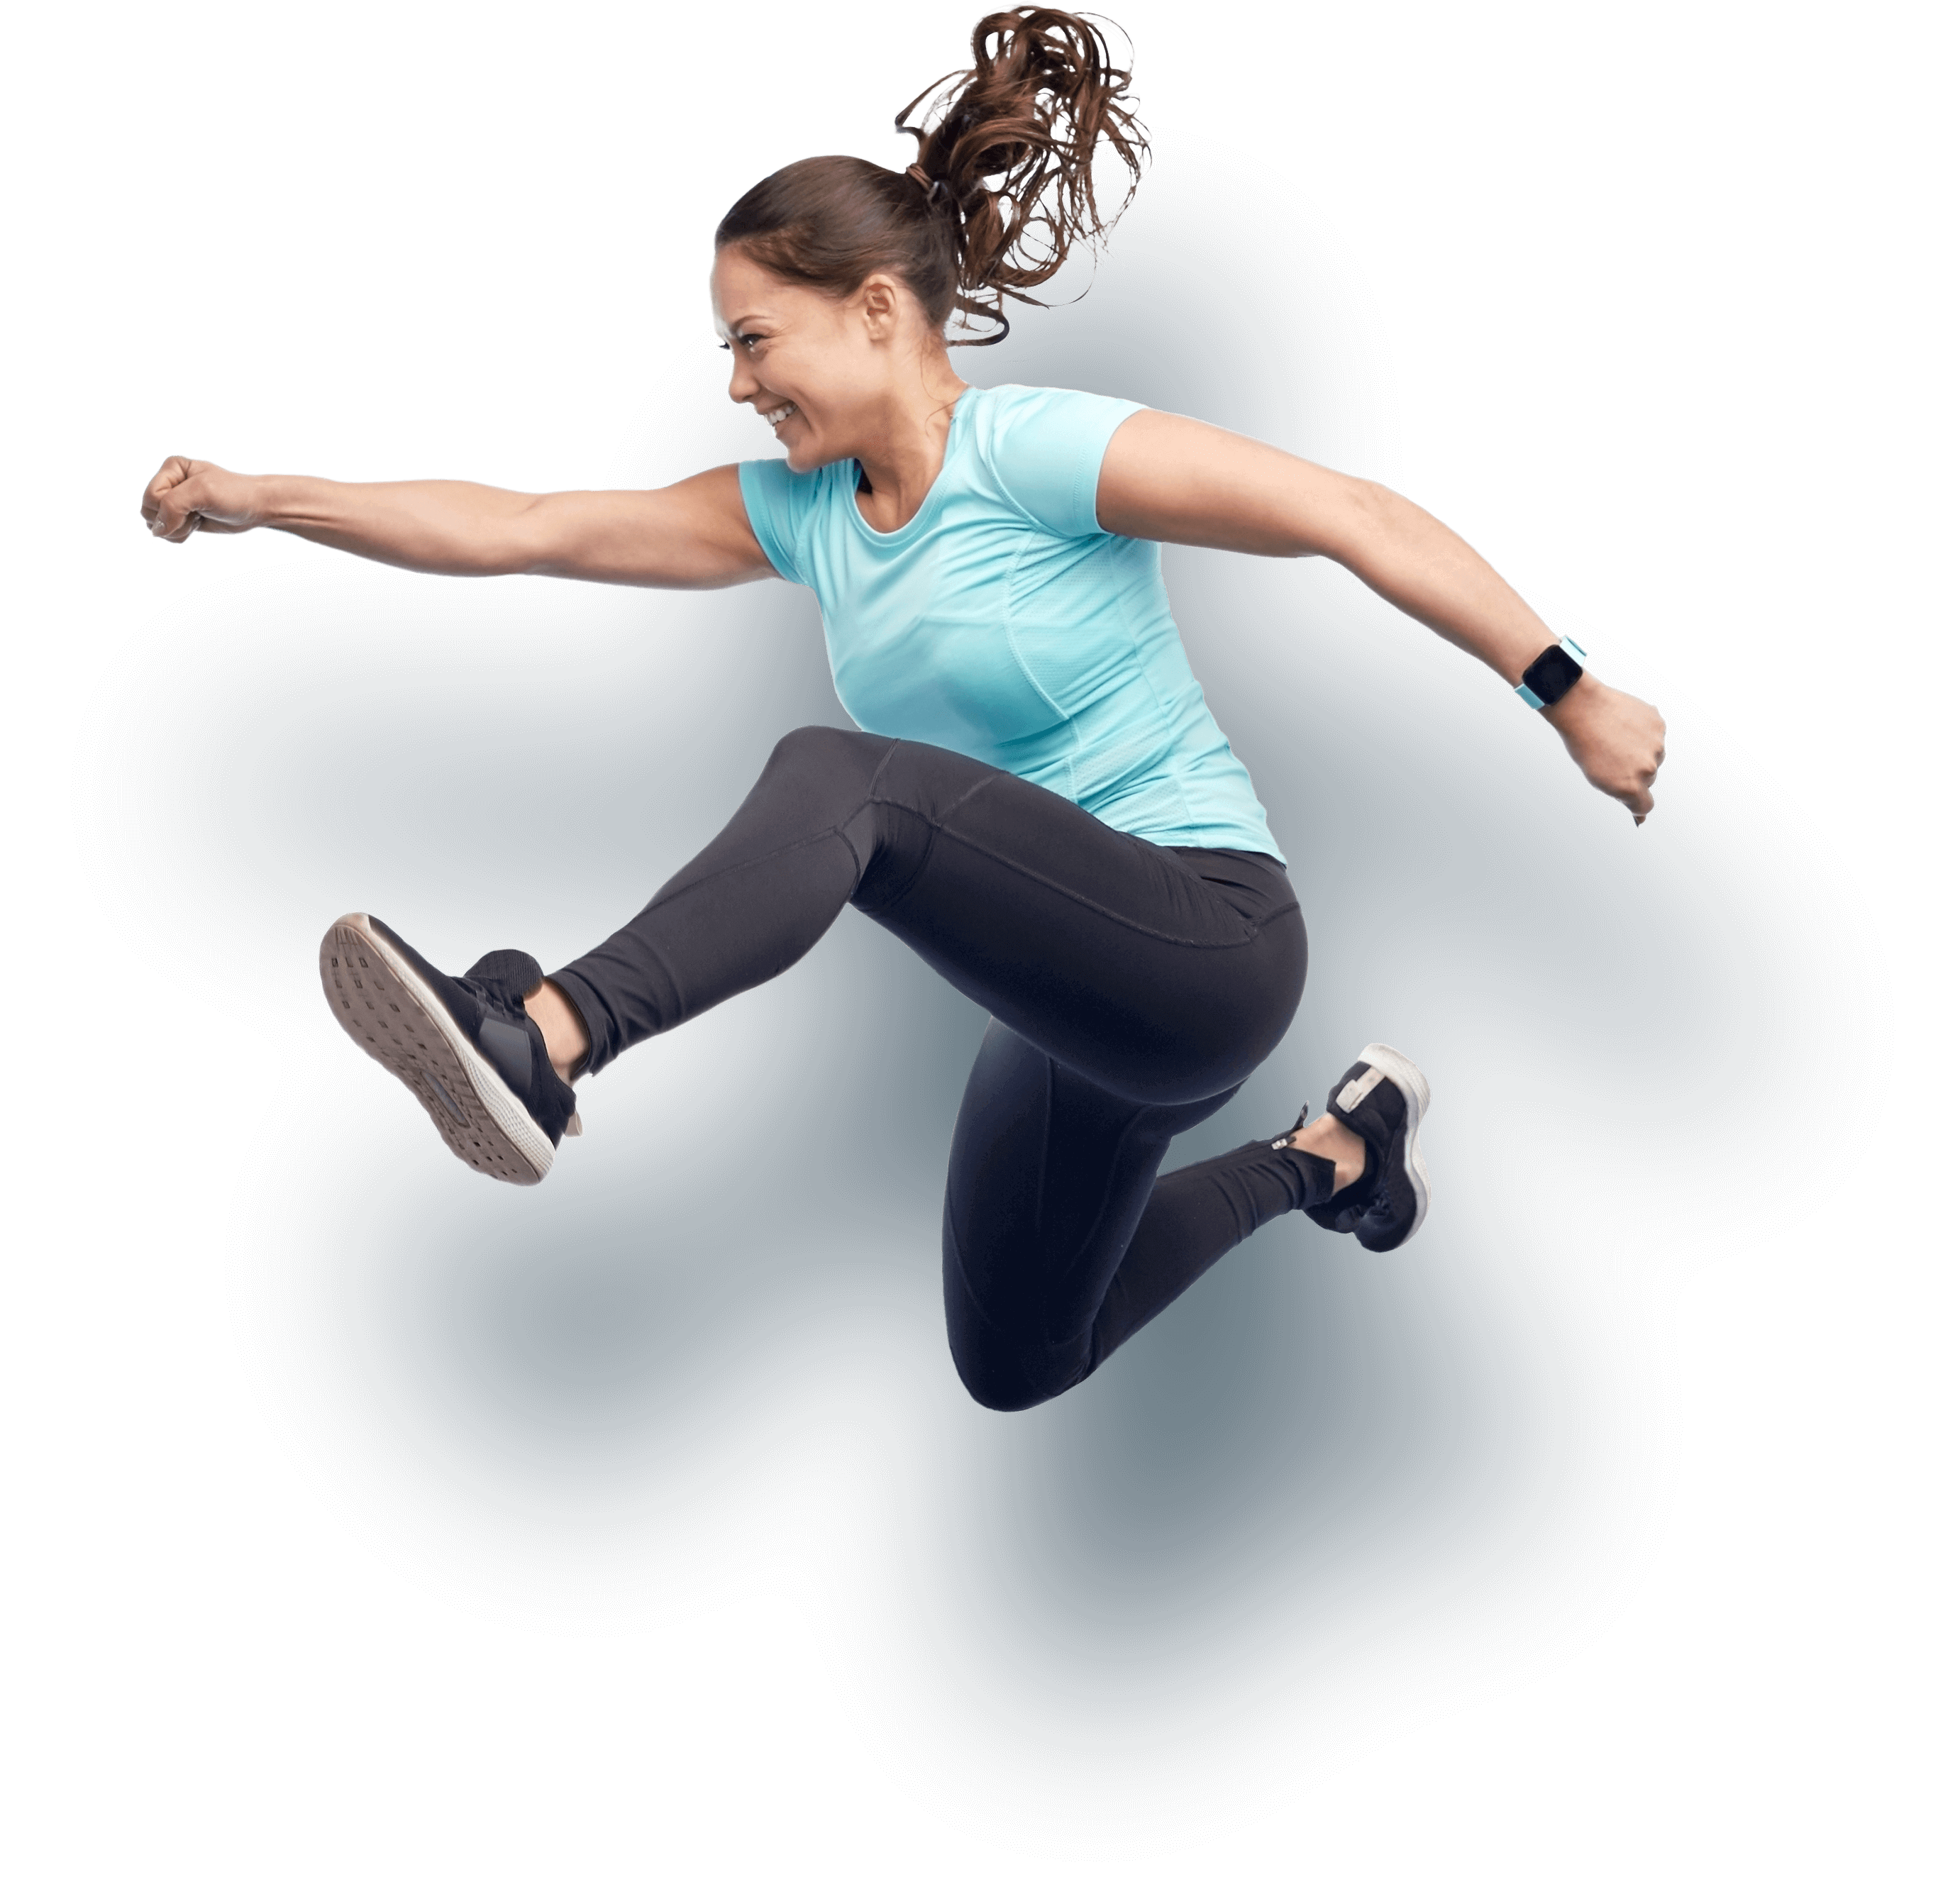 Jumping wear. Фитнес девушка в прыжке. Девушка прыгает. Спорт фитнес. В прыжке.